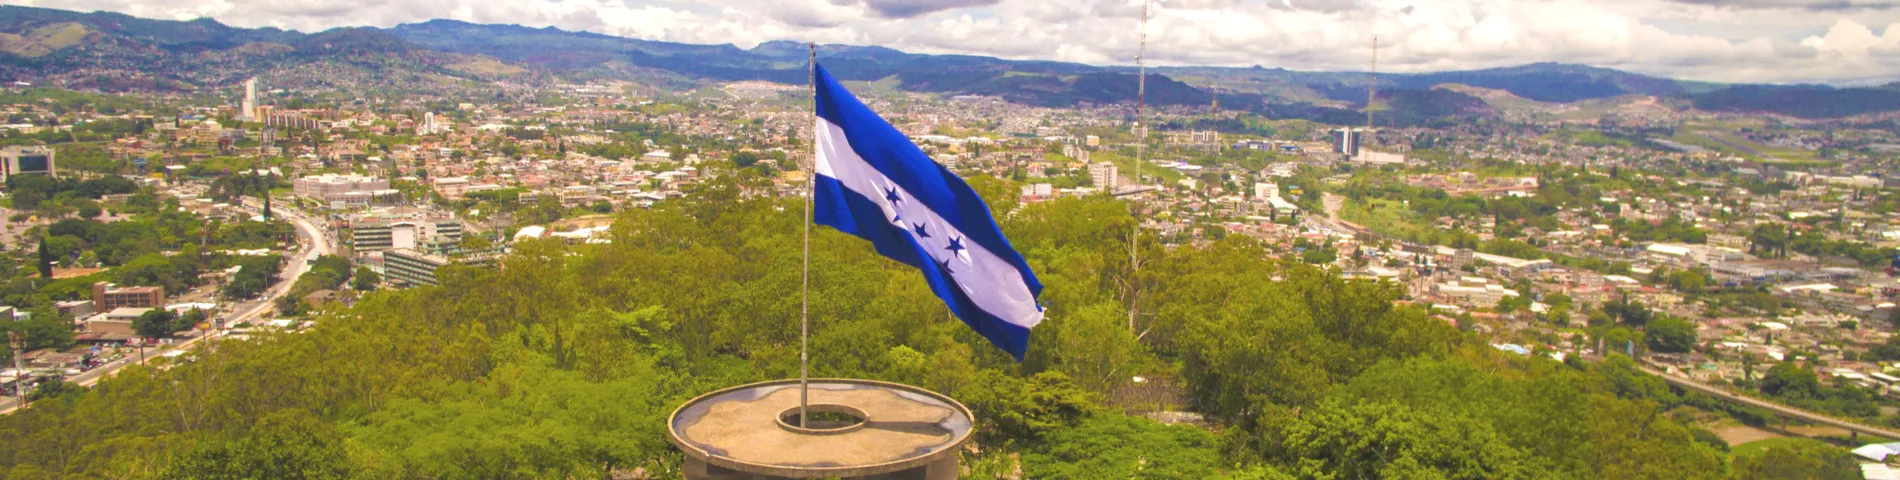 Honduras - Generell*